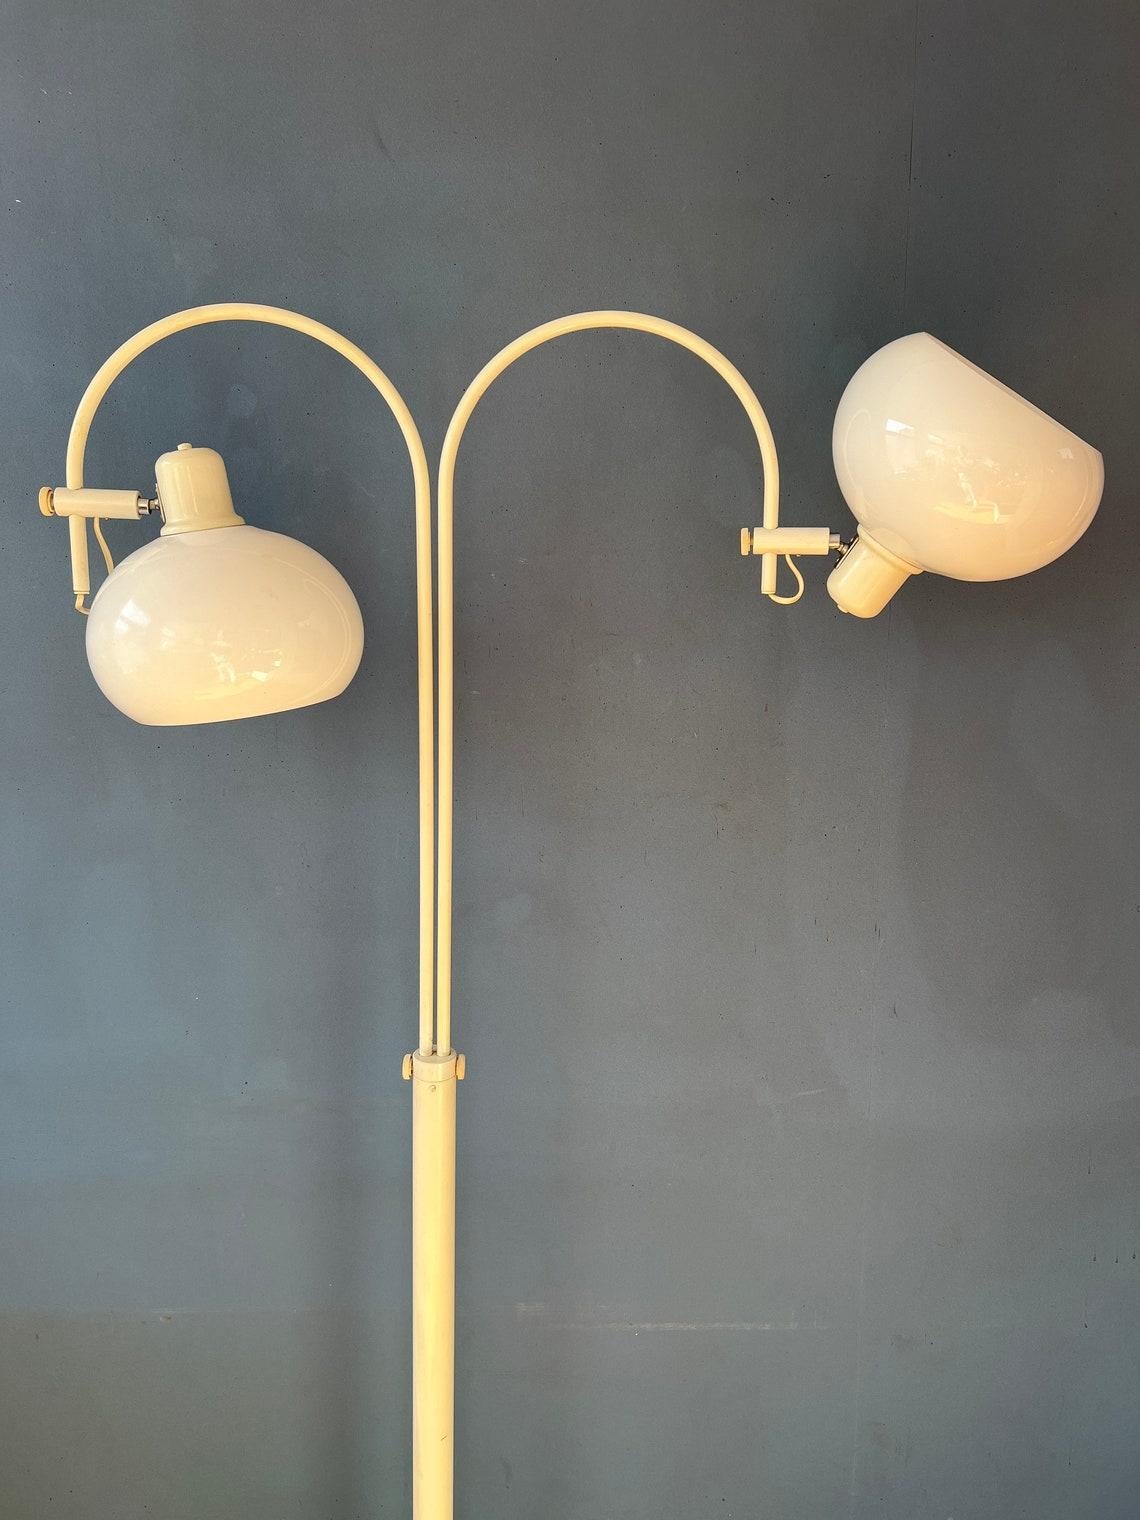 White Flexible Double Arc Mushroom Space Age Floor Lamp, 1970s For Sale 2